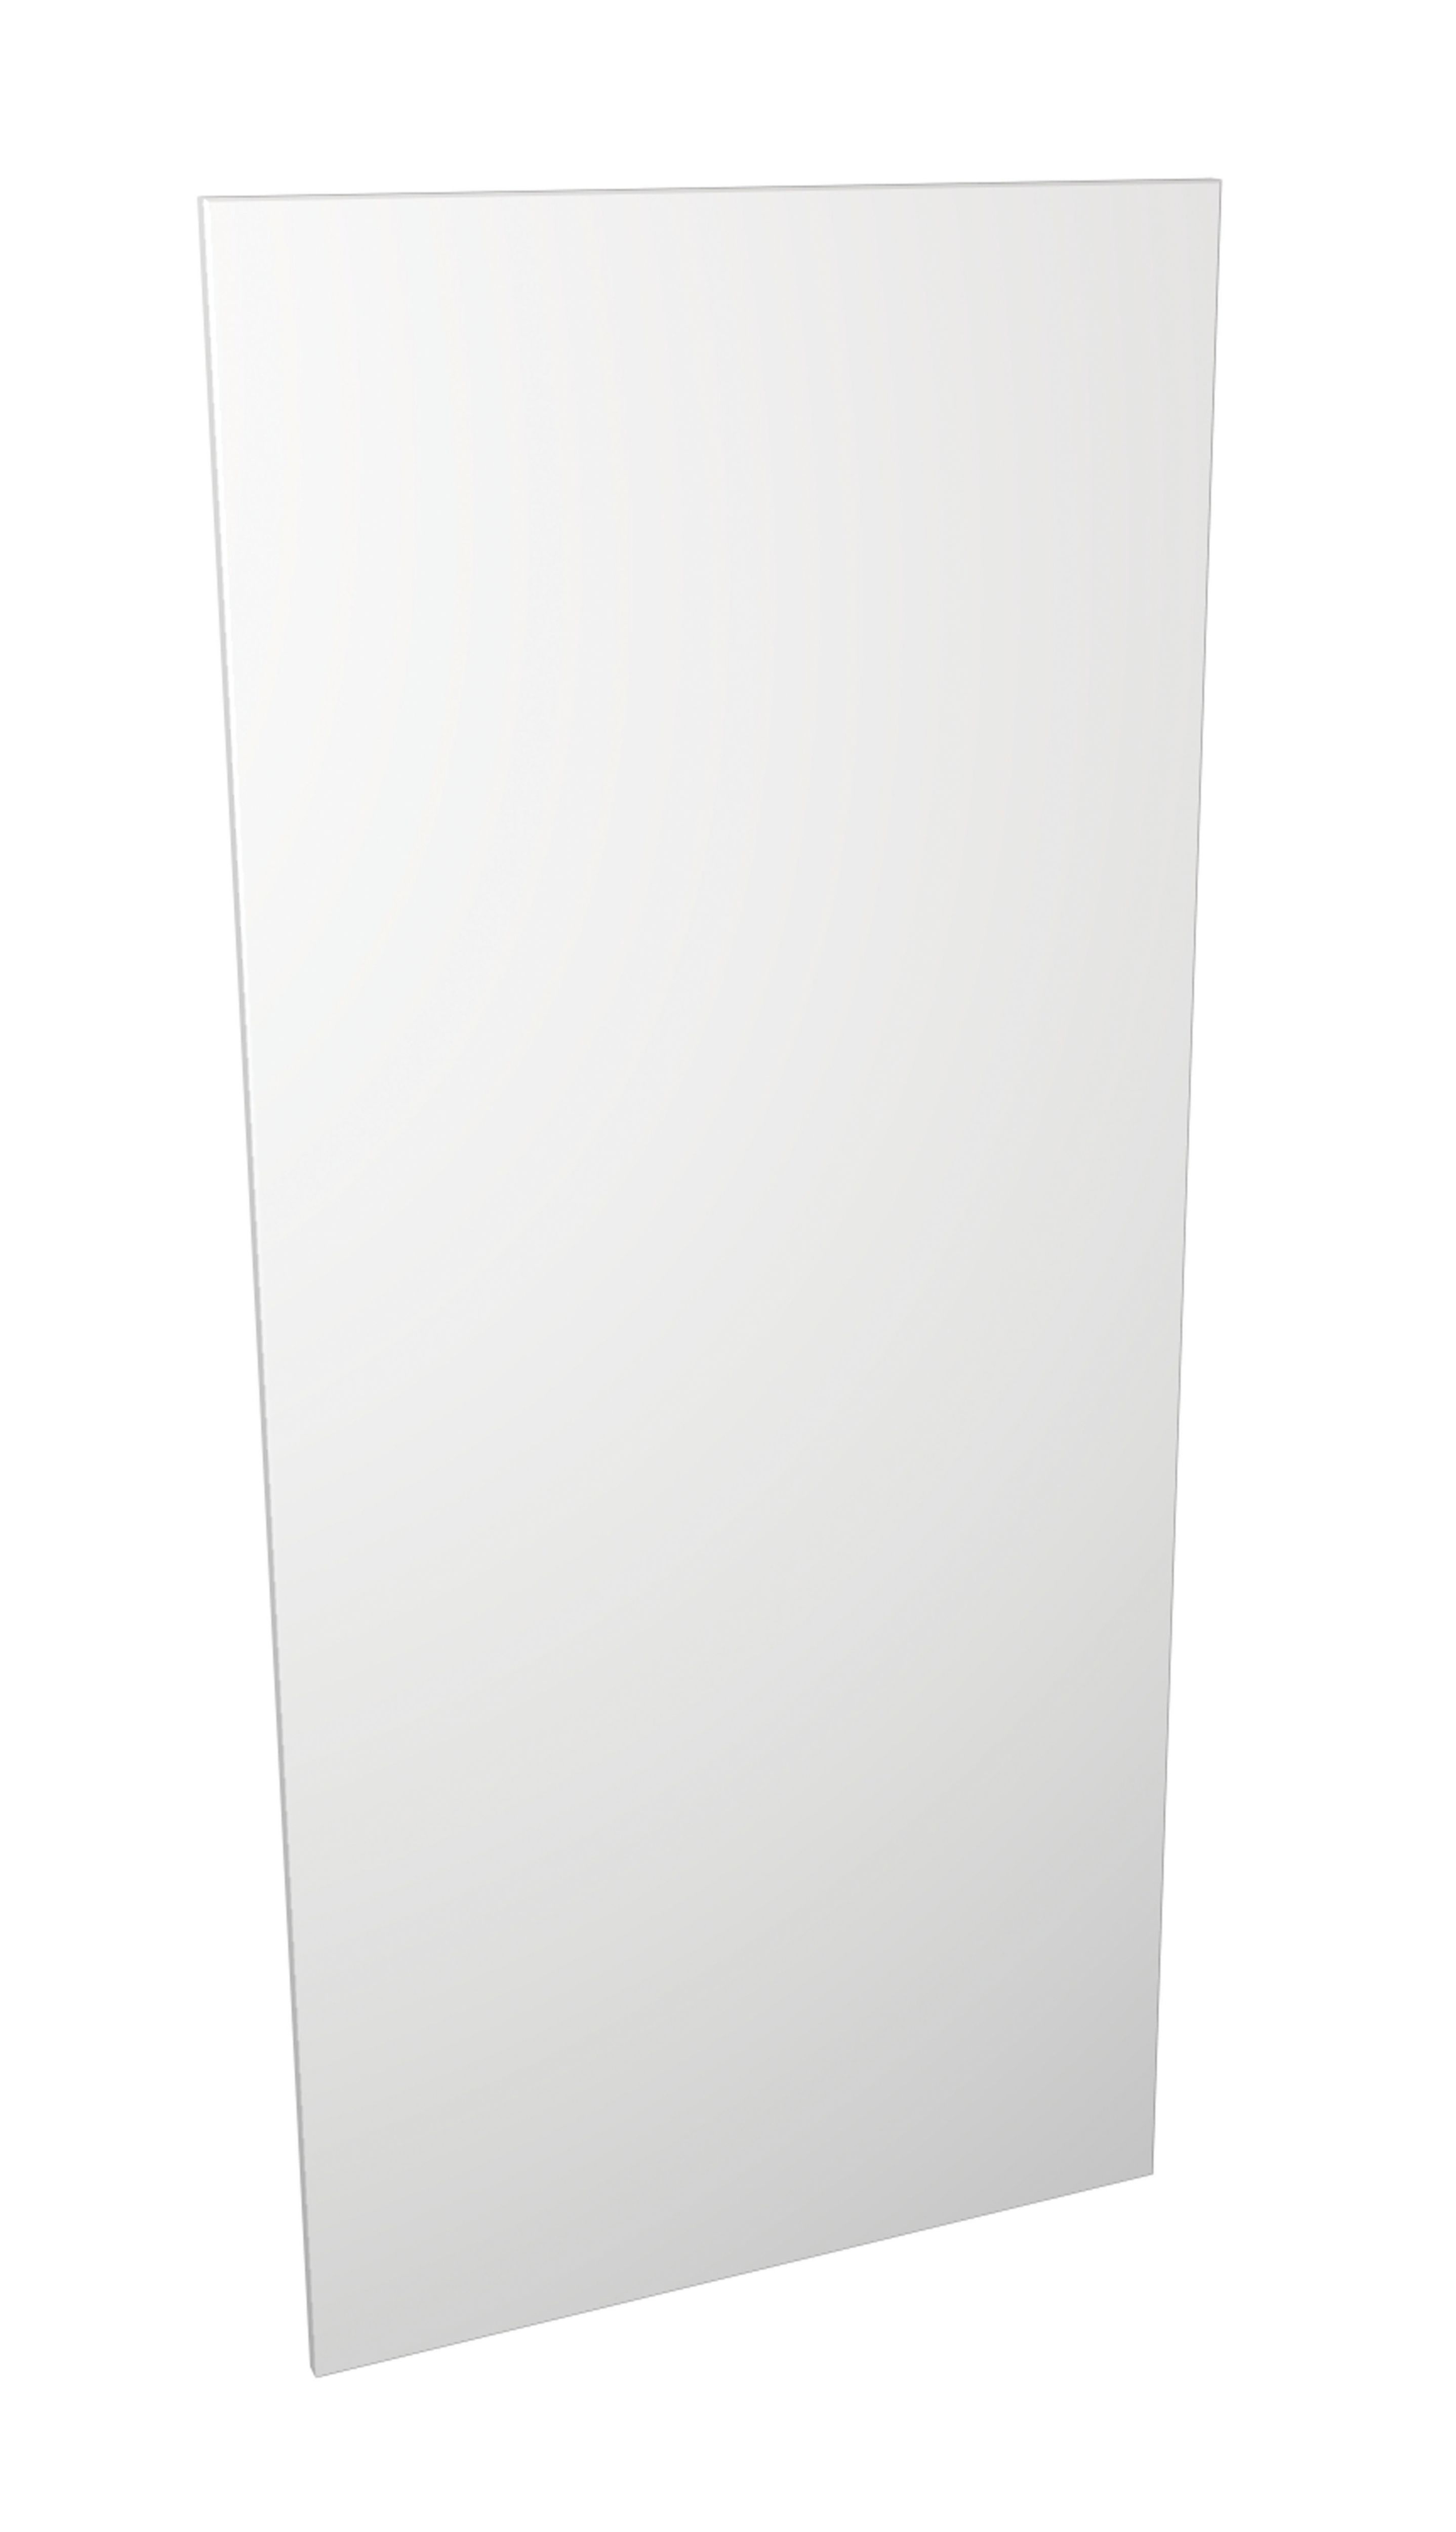 Wickes Dakota White Matt Slab Appliance Door (A) - 600 x 1319mm